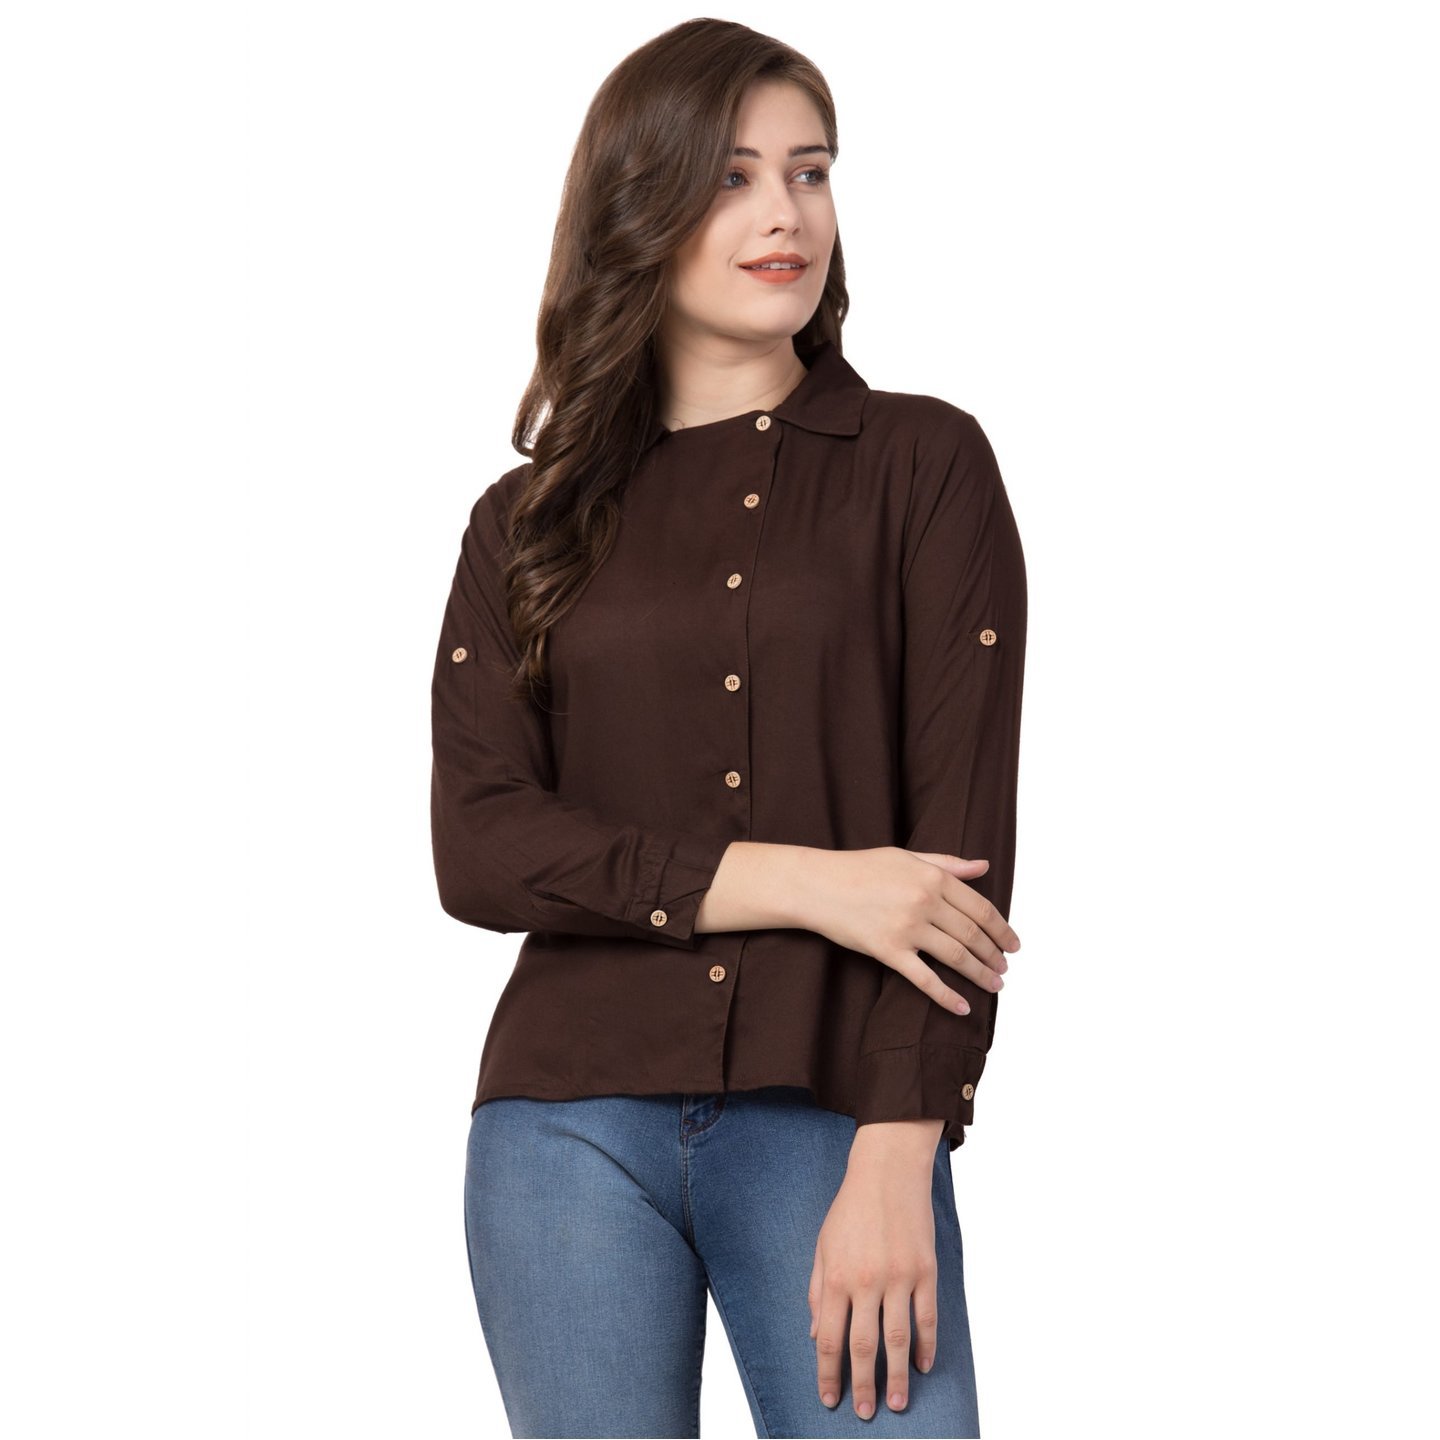 Paretto Brown Color Shirt for Women